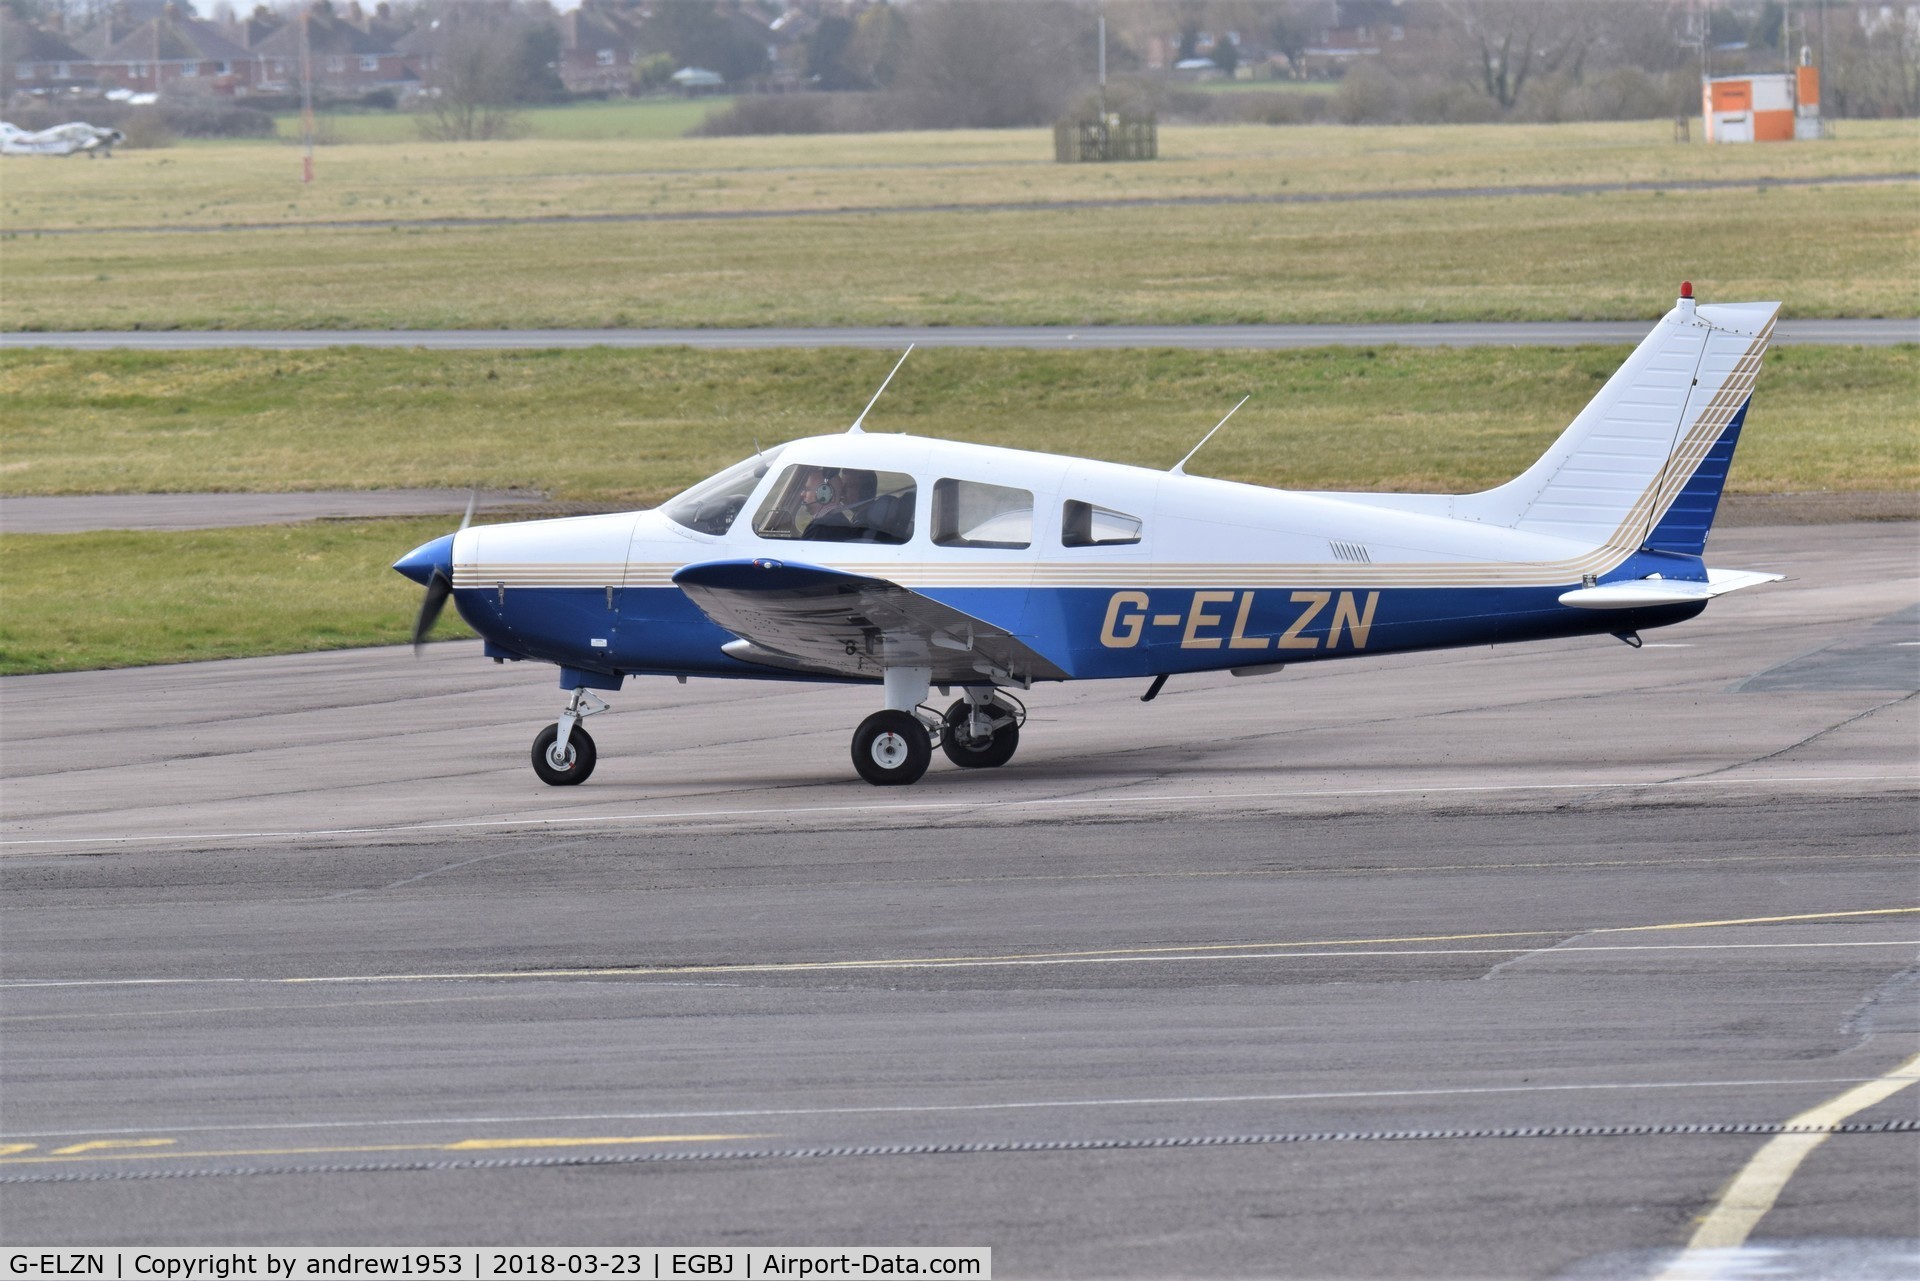 G-ELZN, 1984 Piper PA-28-161 Warrior II C/N 28-8416078, G-ELZN at Gloucestershire Airport.